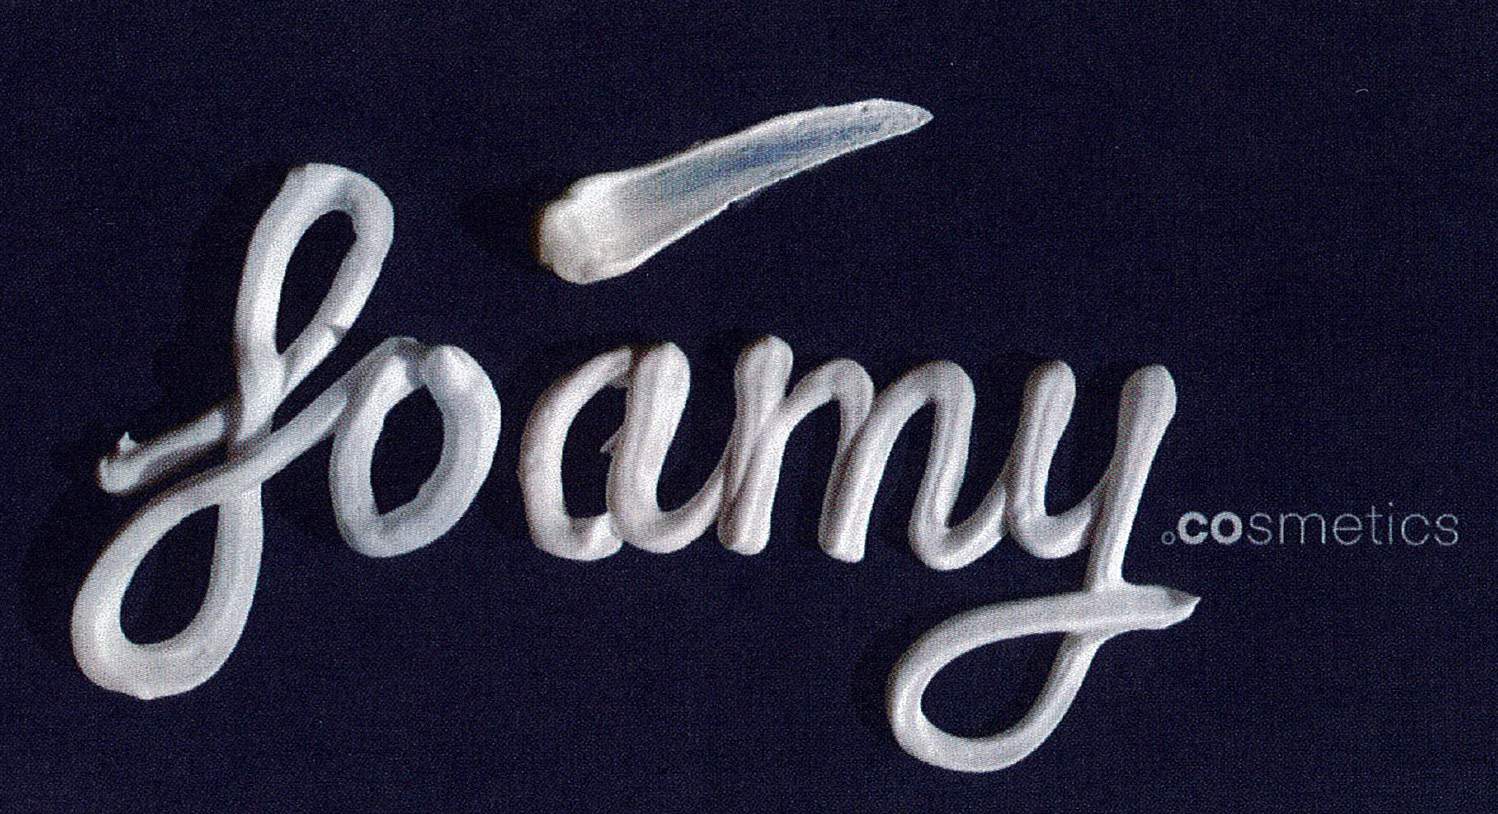 Foamy cosmetic logo by Varvara Alexseeva